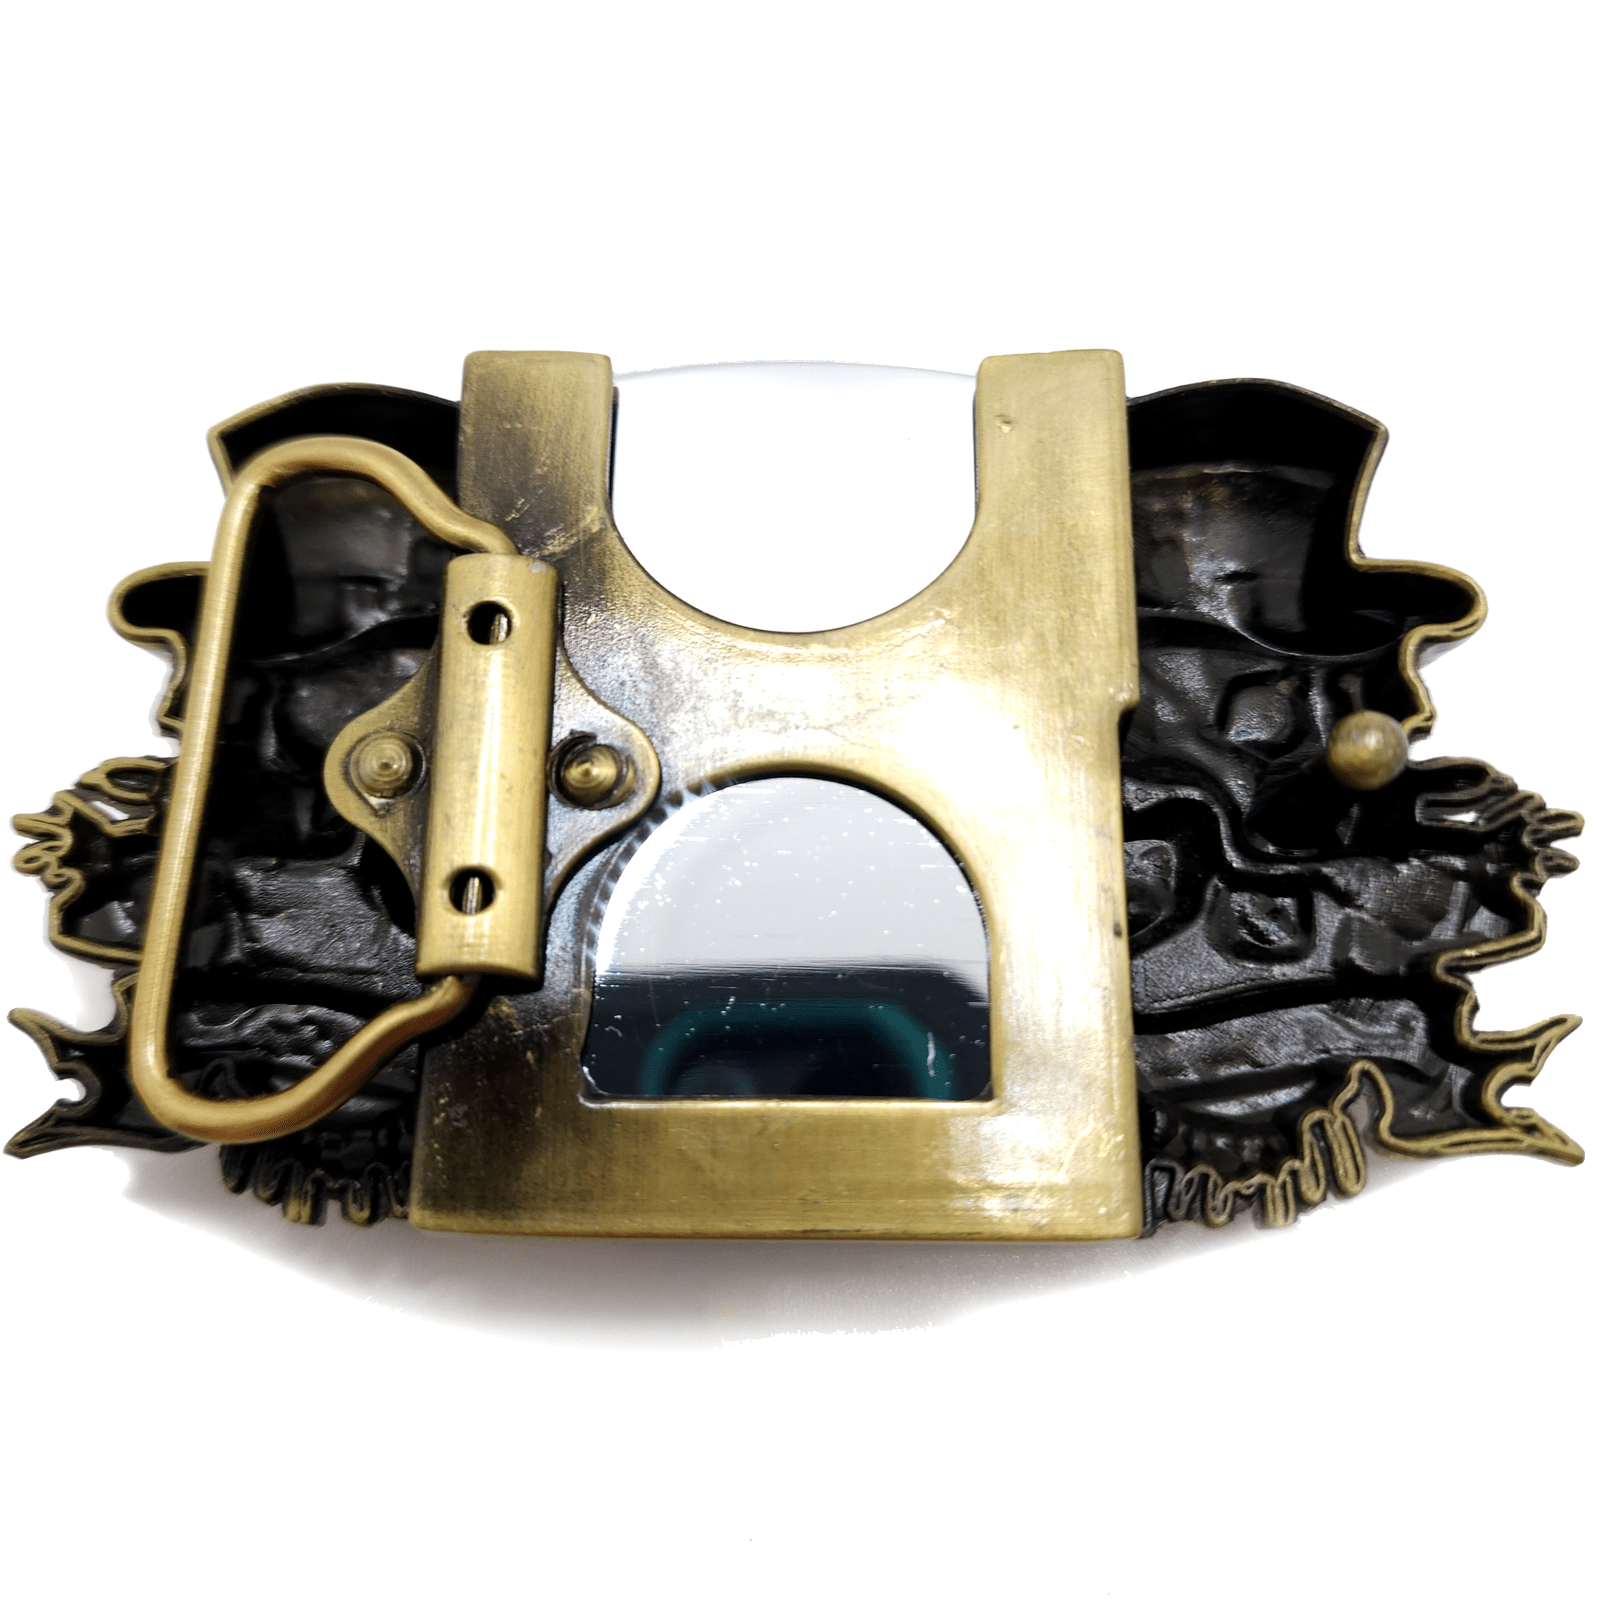 Triple Joker Skulls Bronze Lighter Belt Buckle with Smiling Skull Lighter Holder Buckle shop.AxeDr.com Beltbuckle, Buckle, Lighter, Lighter Belt Buckles, lighter buckle, Lighters